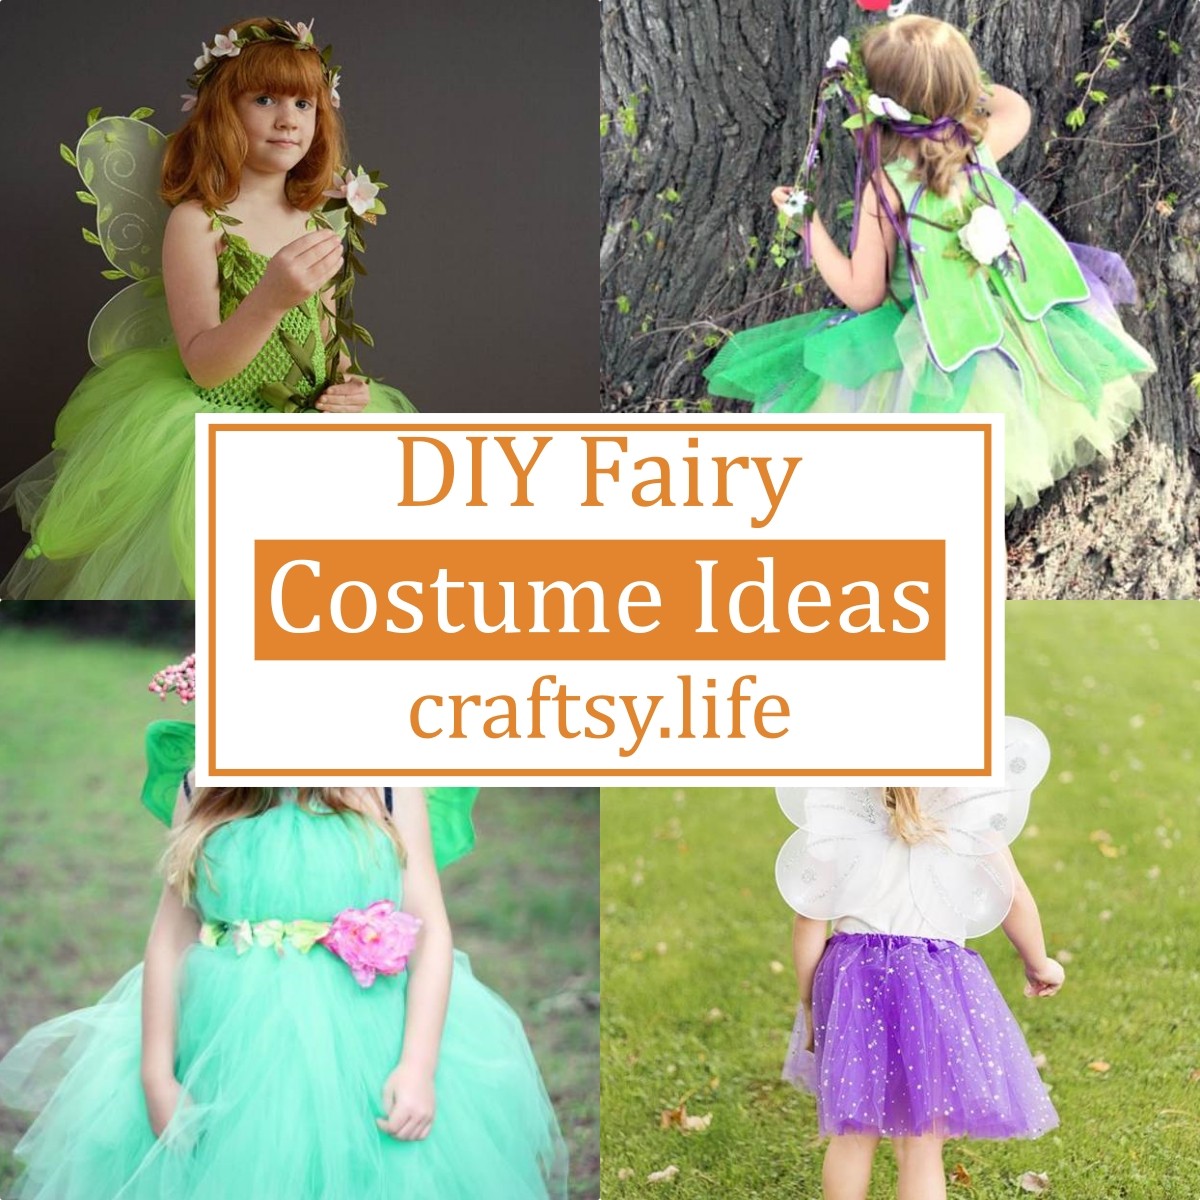 DIY Fairy Costume Ideas